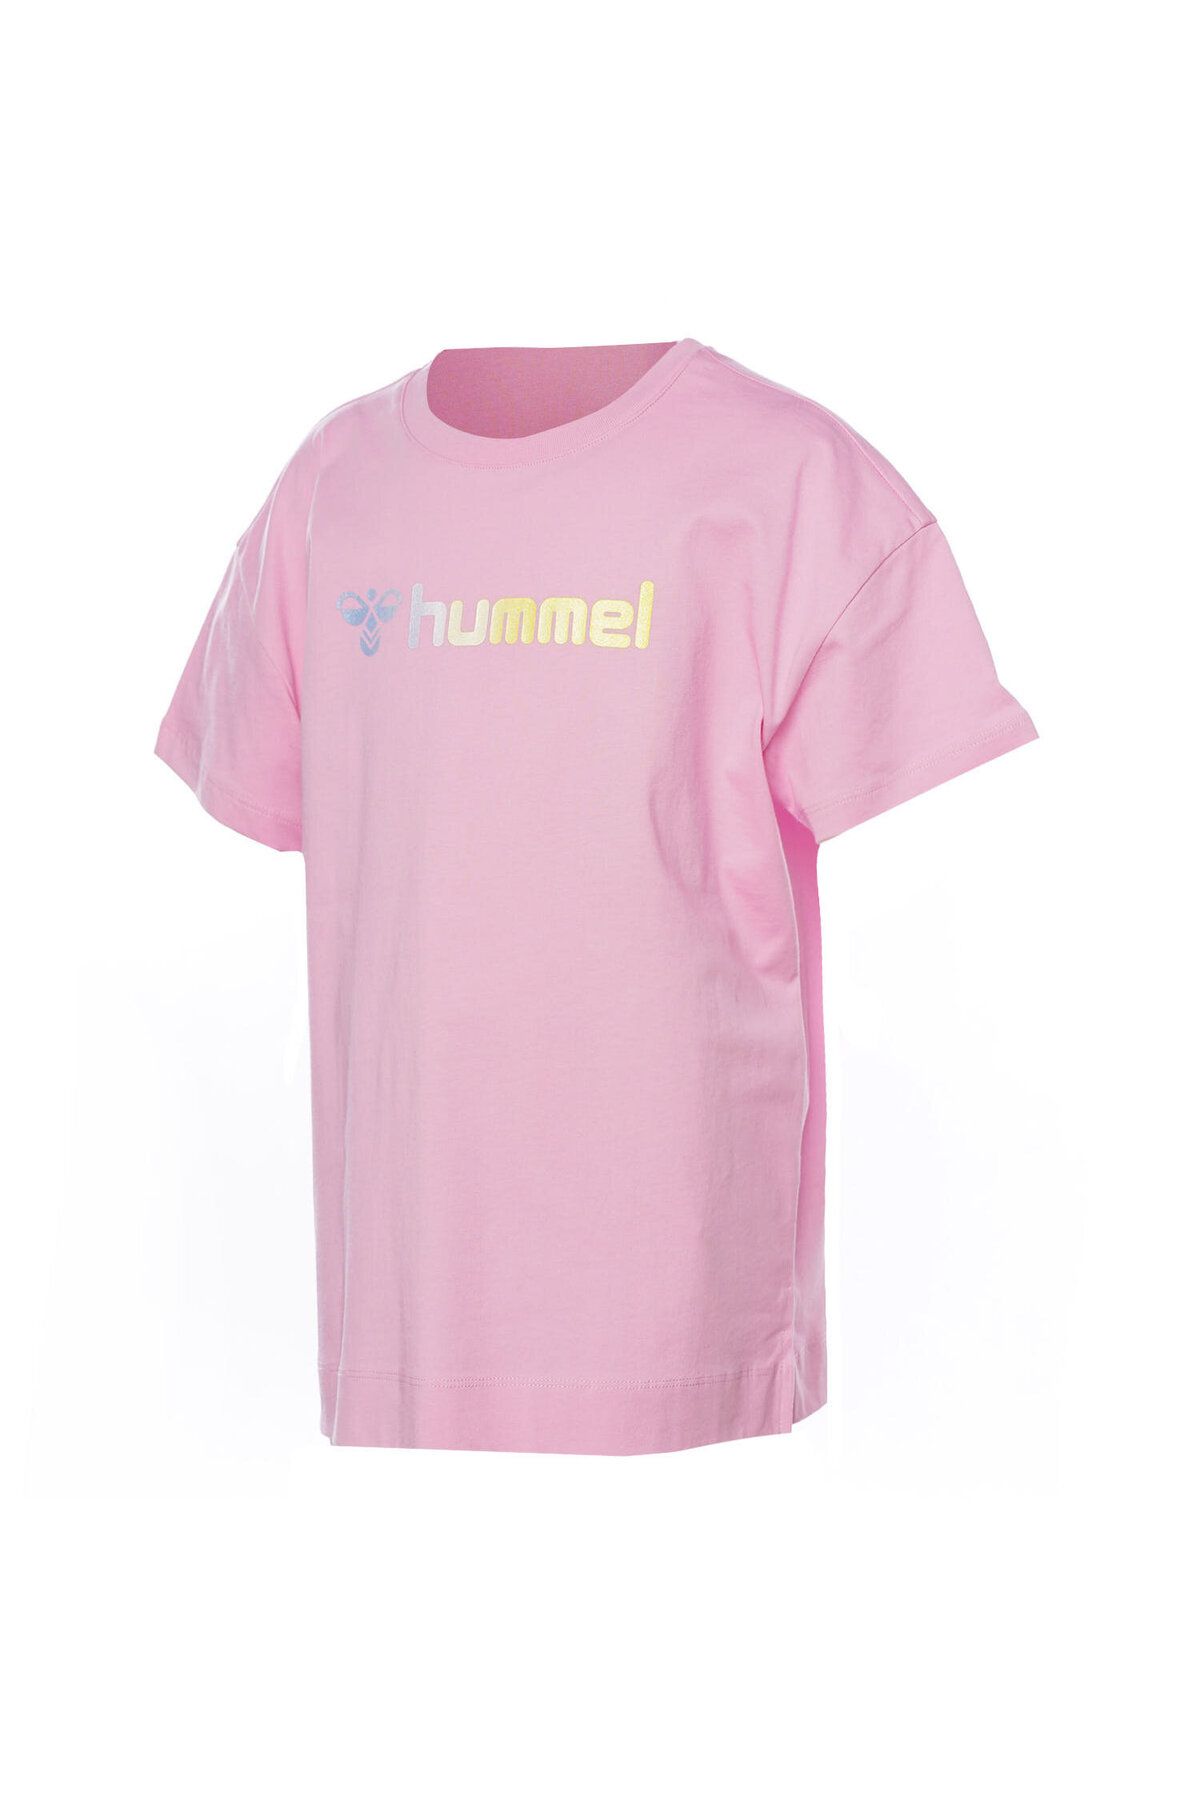 hummel دختر جاز یقه صورتی t -shirt